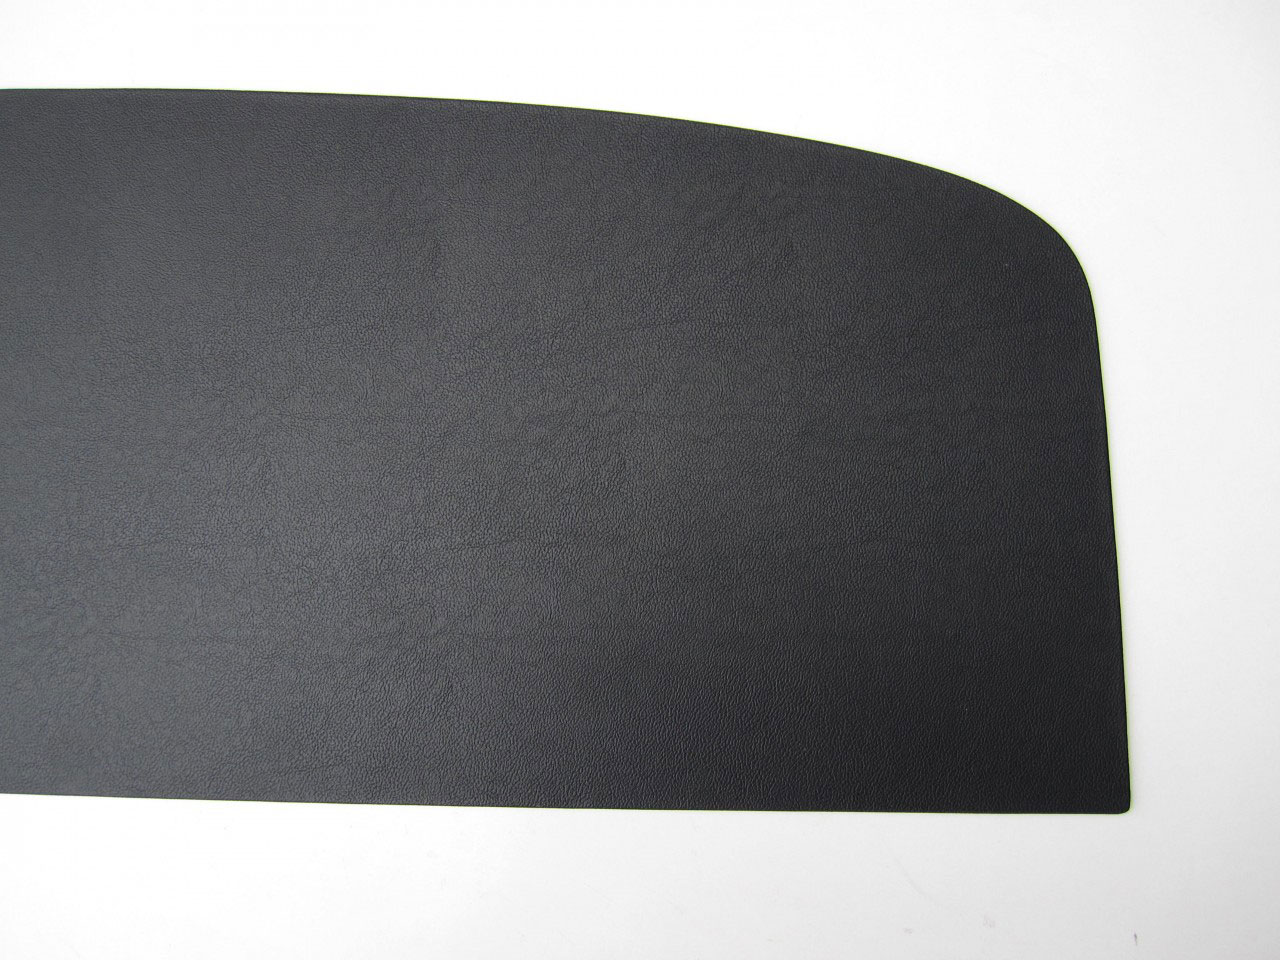 Holden Monaro HT Monaro Coupe 10X Black Parcel Shelf (Image 2 of 7)